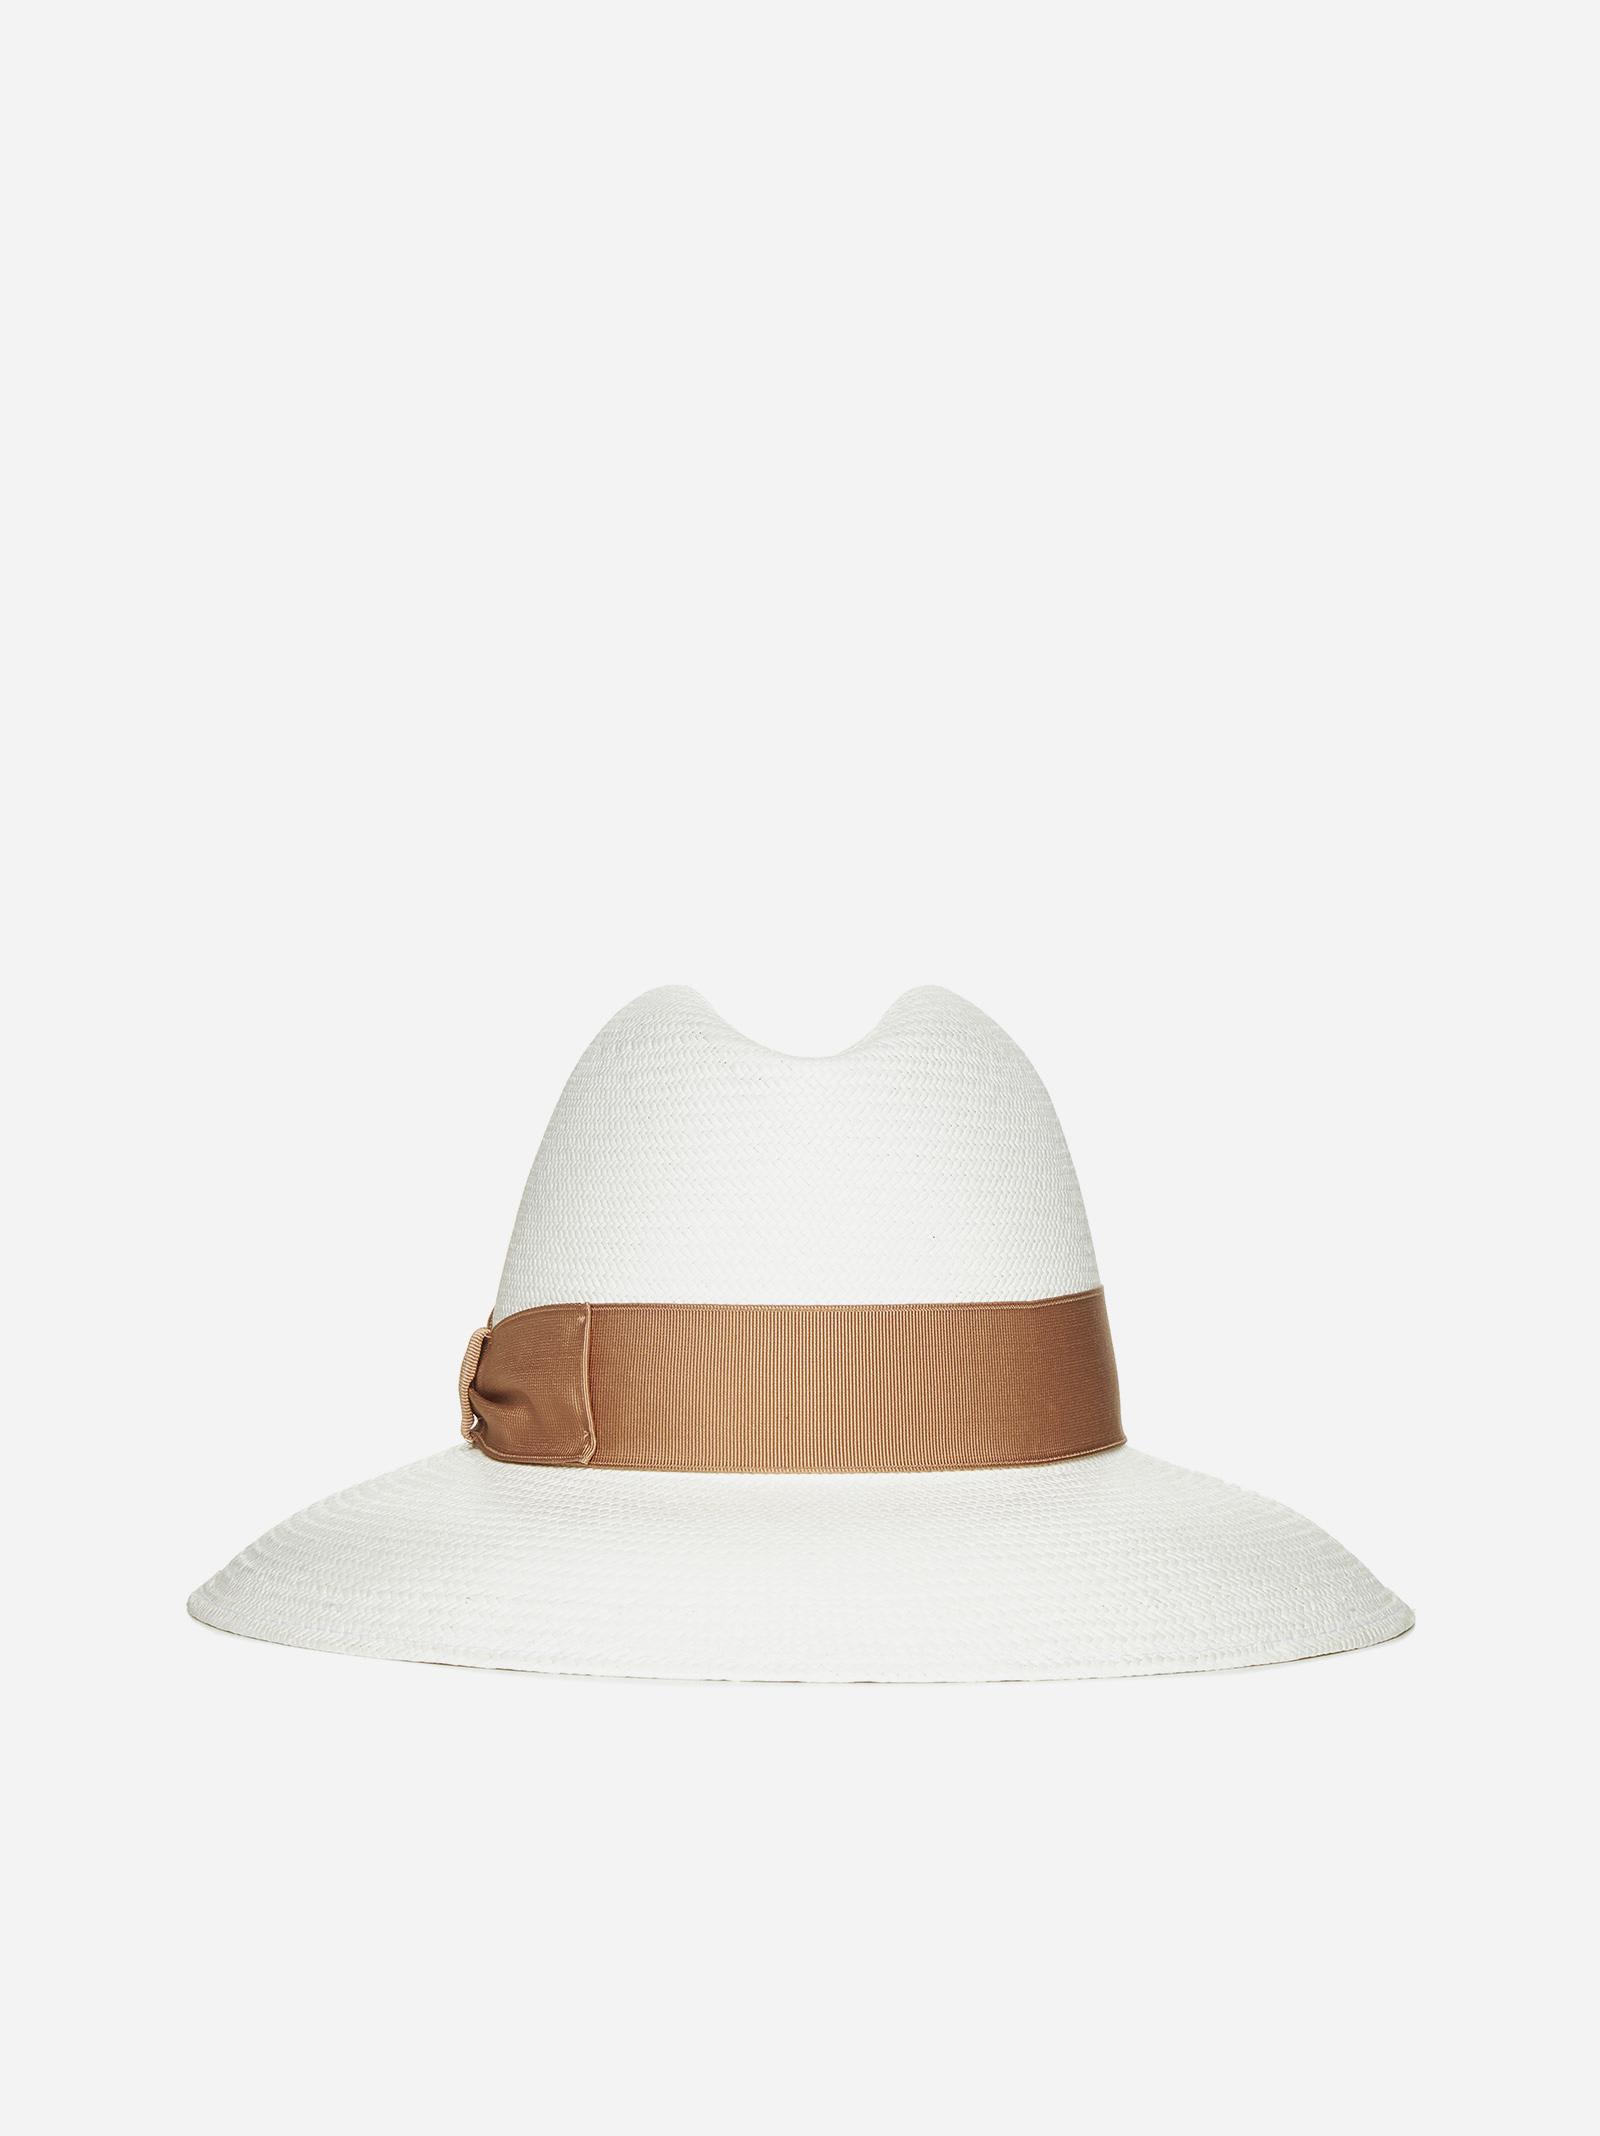 Caludette Large Brim Panama Hat